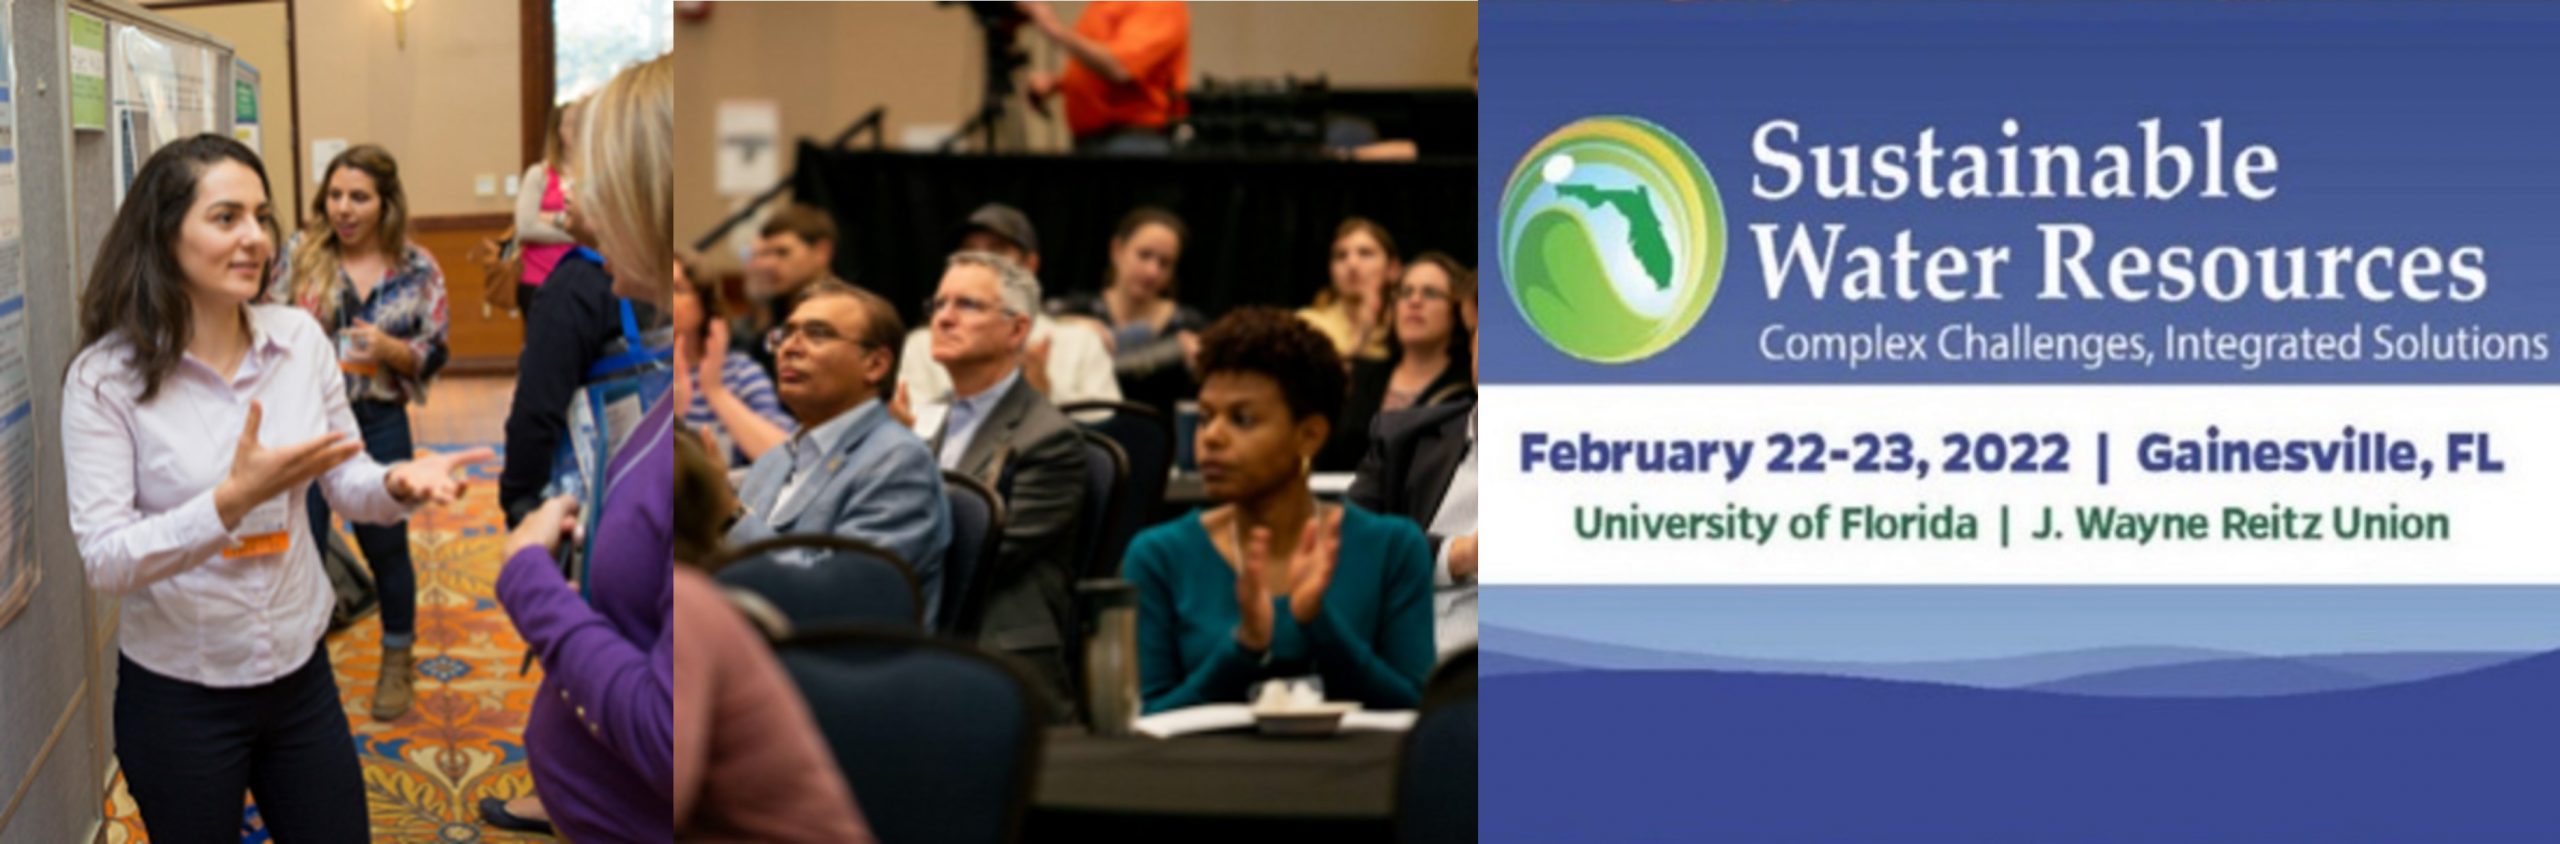 UF Water Symposium will include program on coastal water